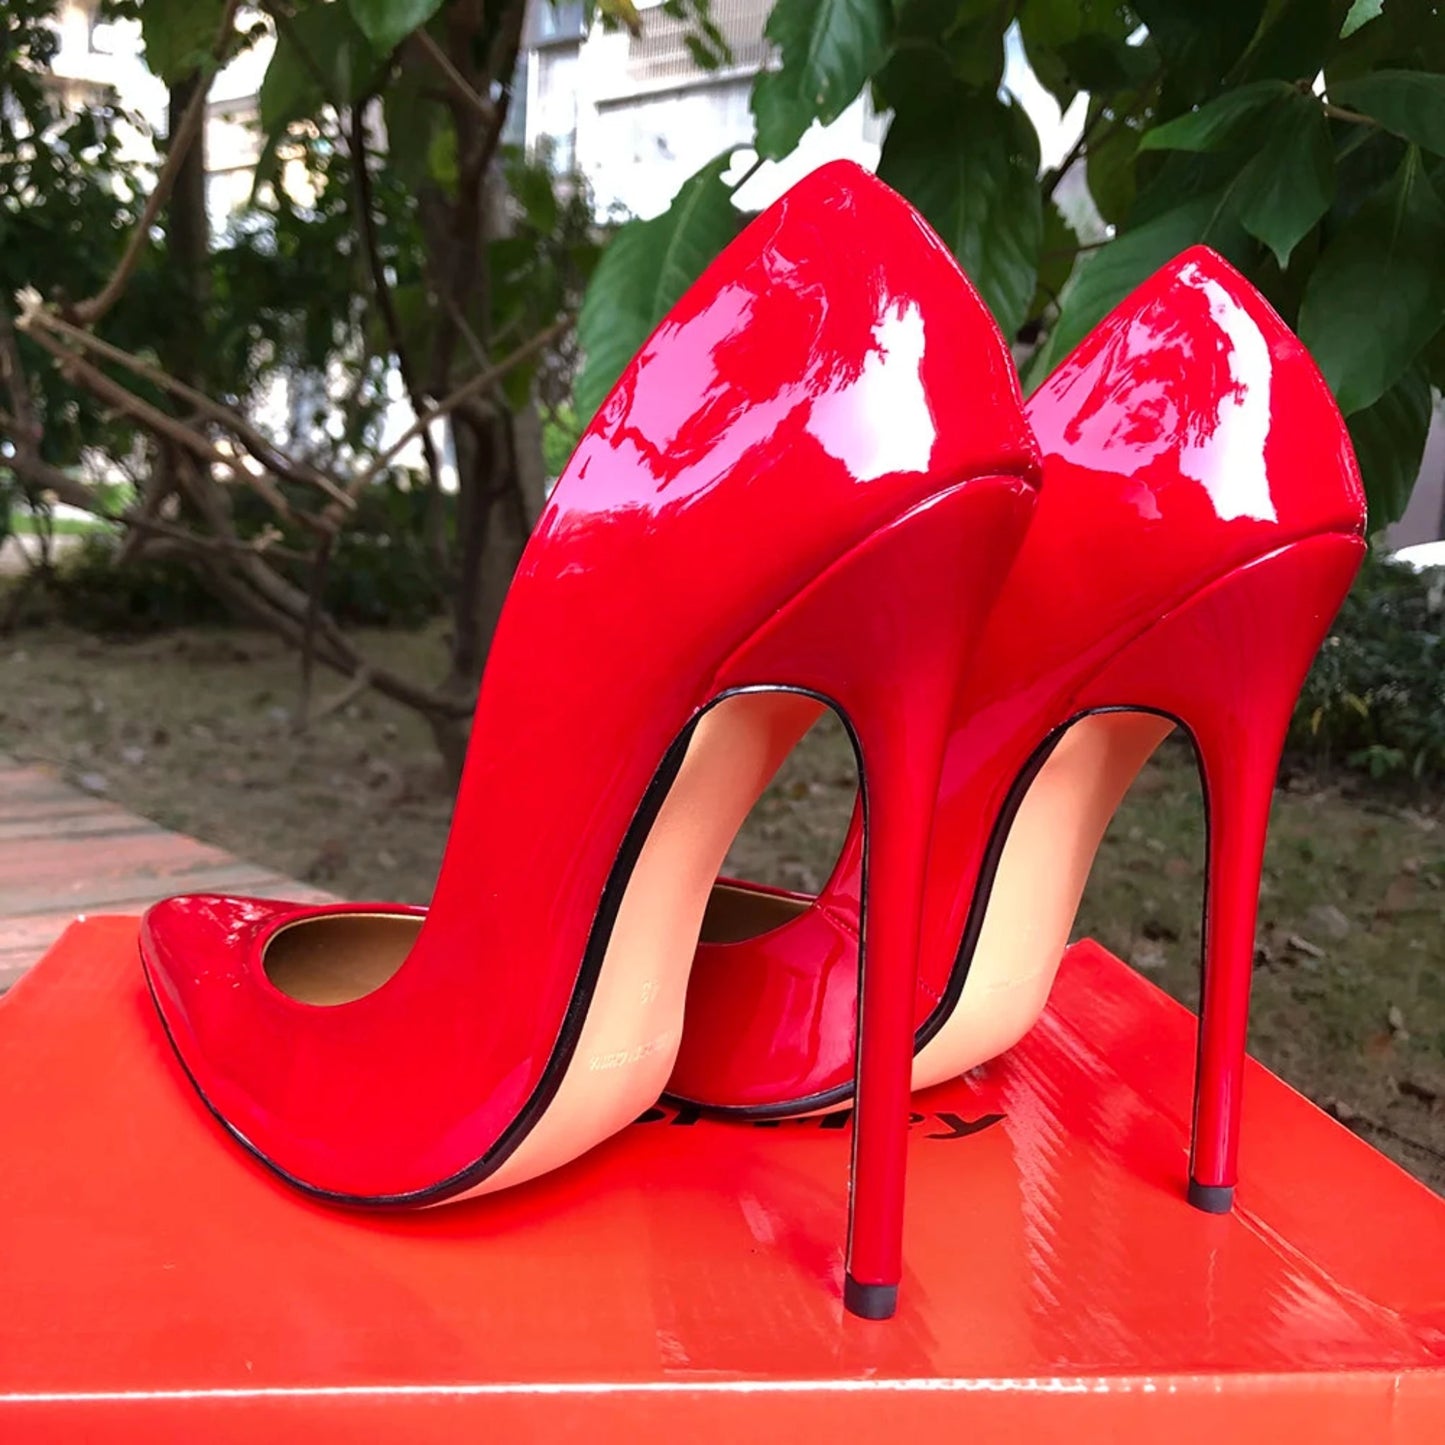 Zapatos de tacón de aguja rojos con punta extrema